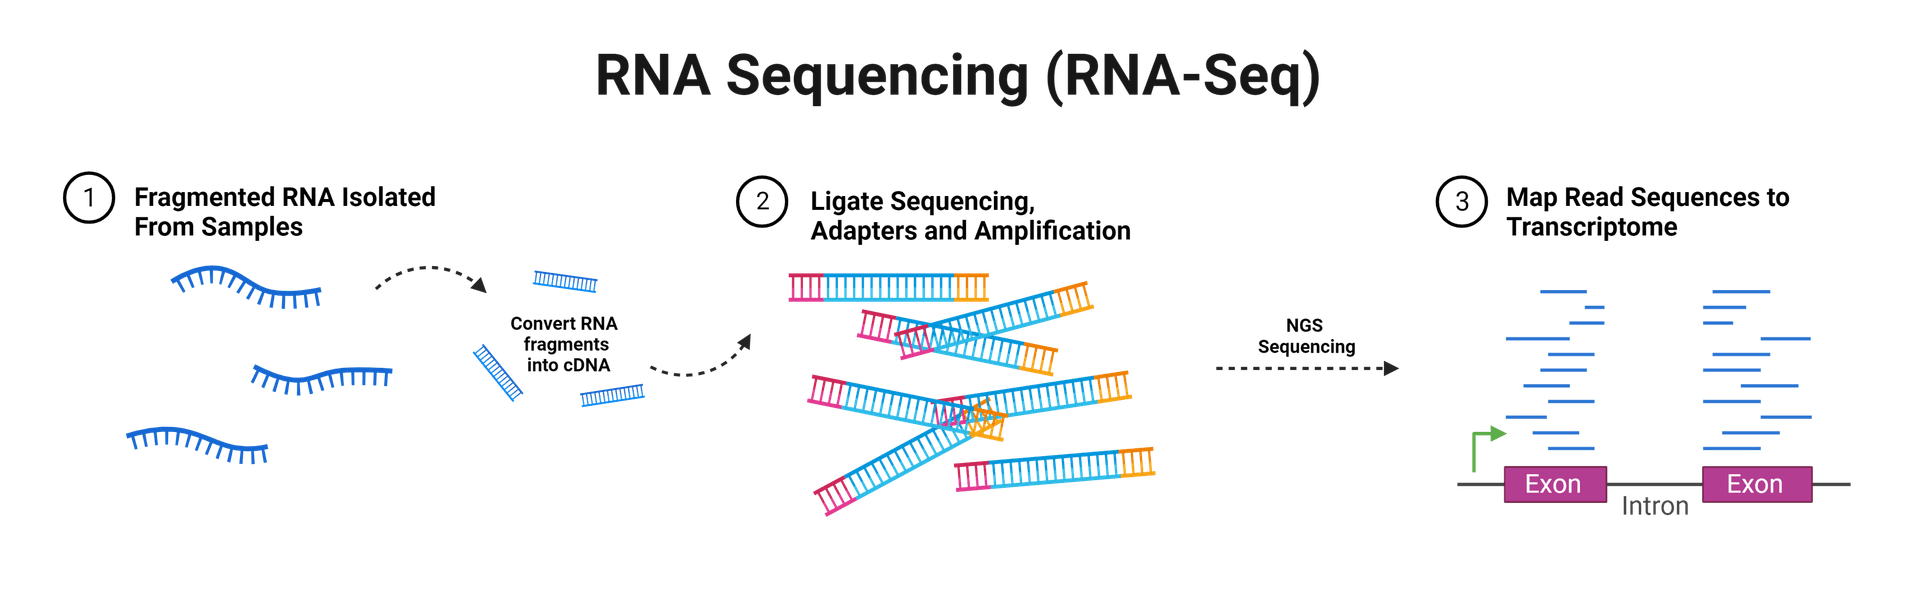 RNA-seq workflow